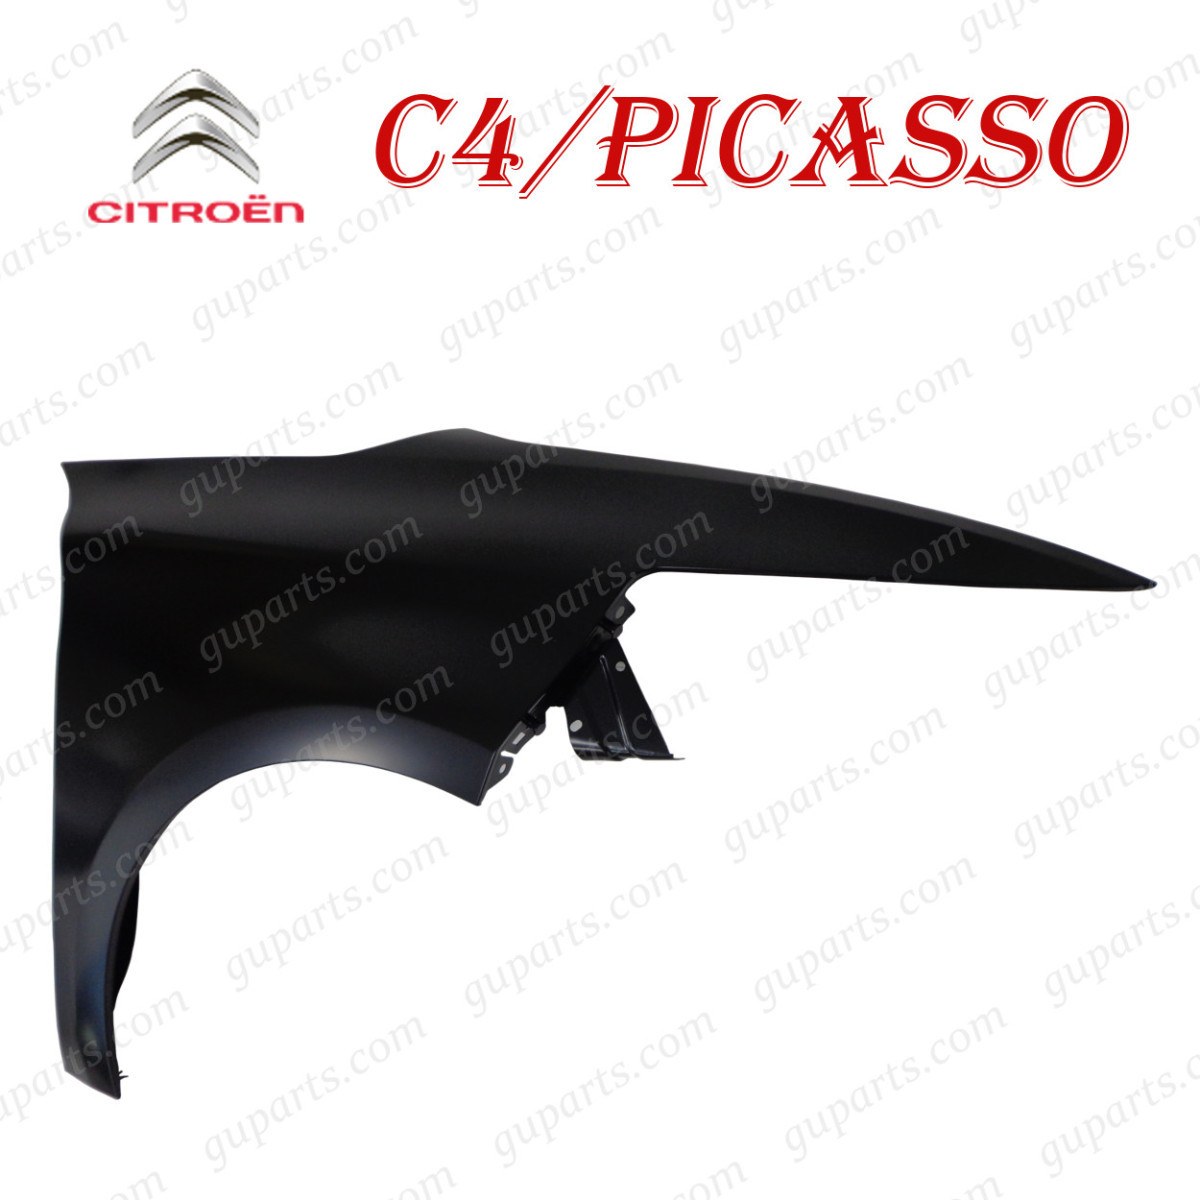  Citroen C4 Picasso B785G01 2014~ передний правое крыло 1612022280 9801572180 PICASSO